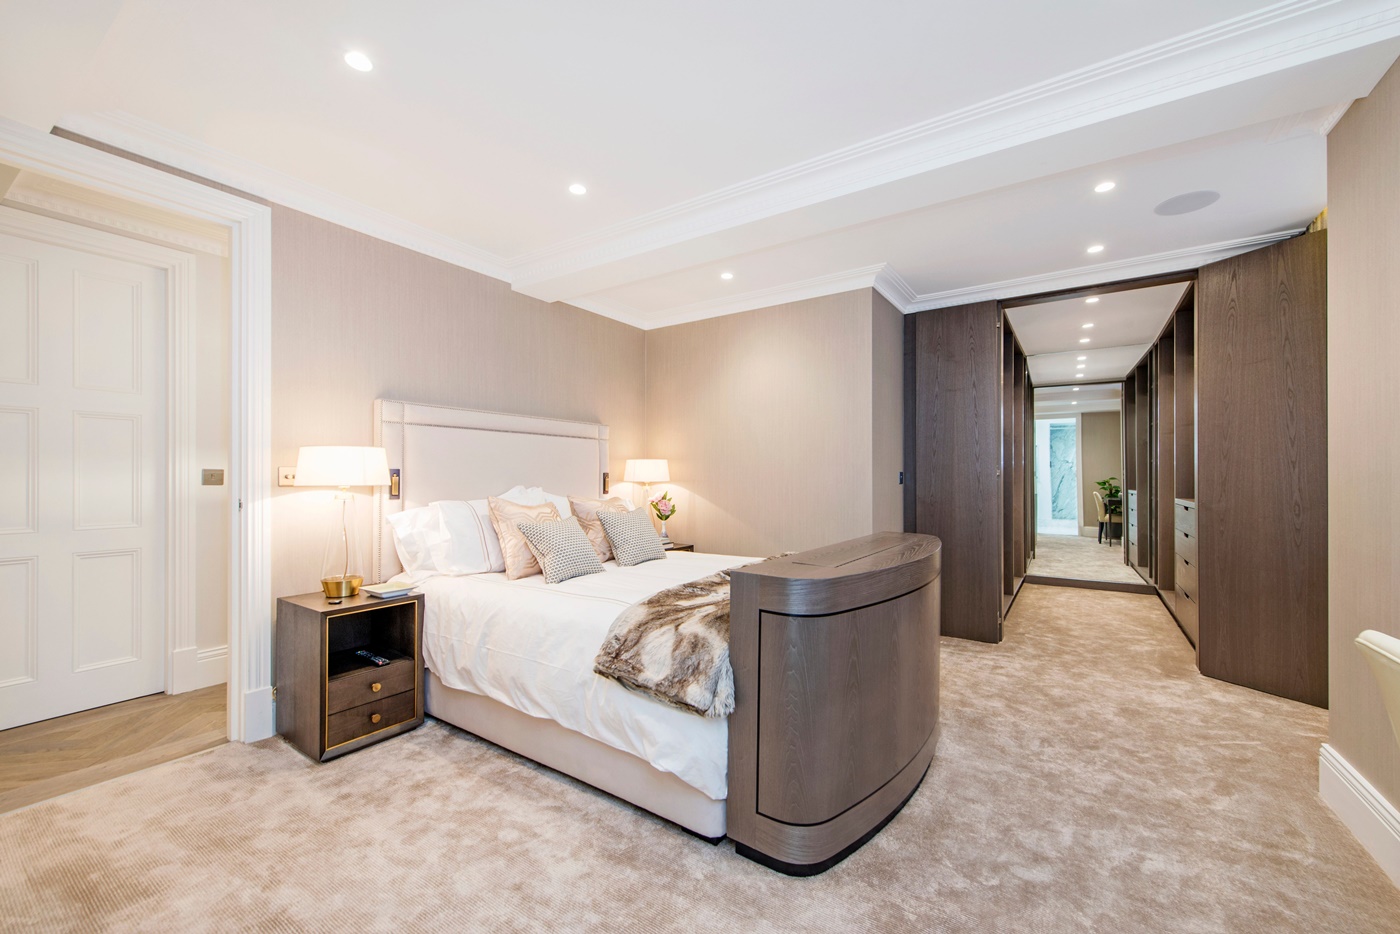 Bespoke bedroom furniture in Hertfordshire